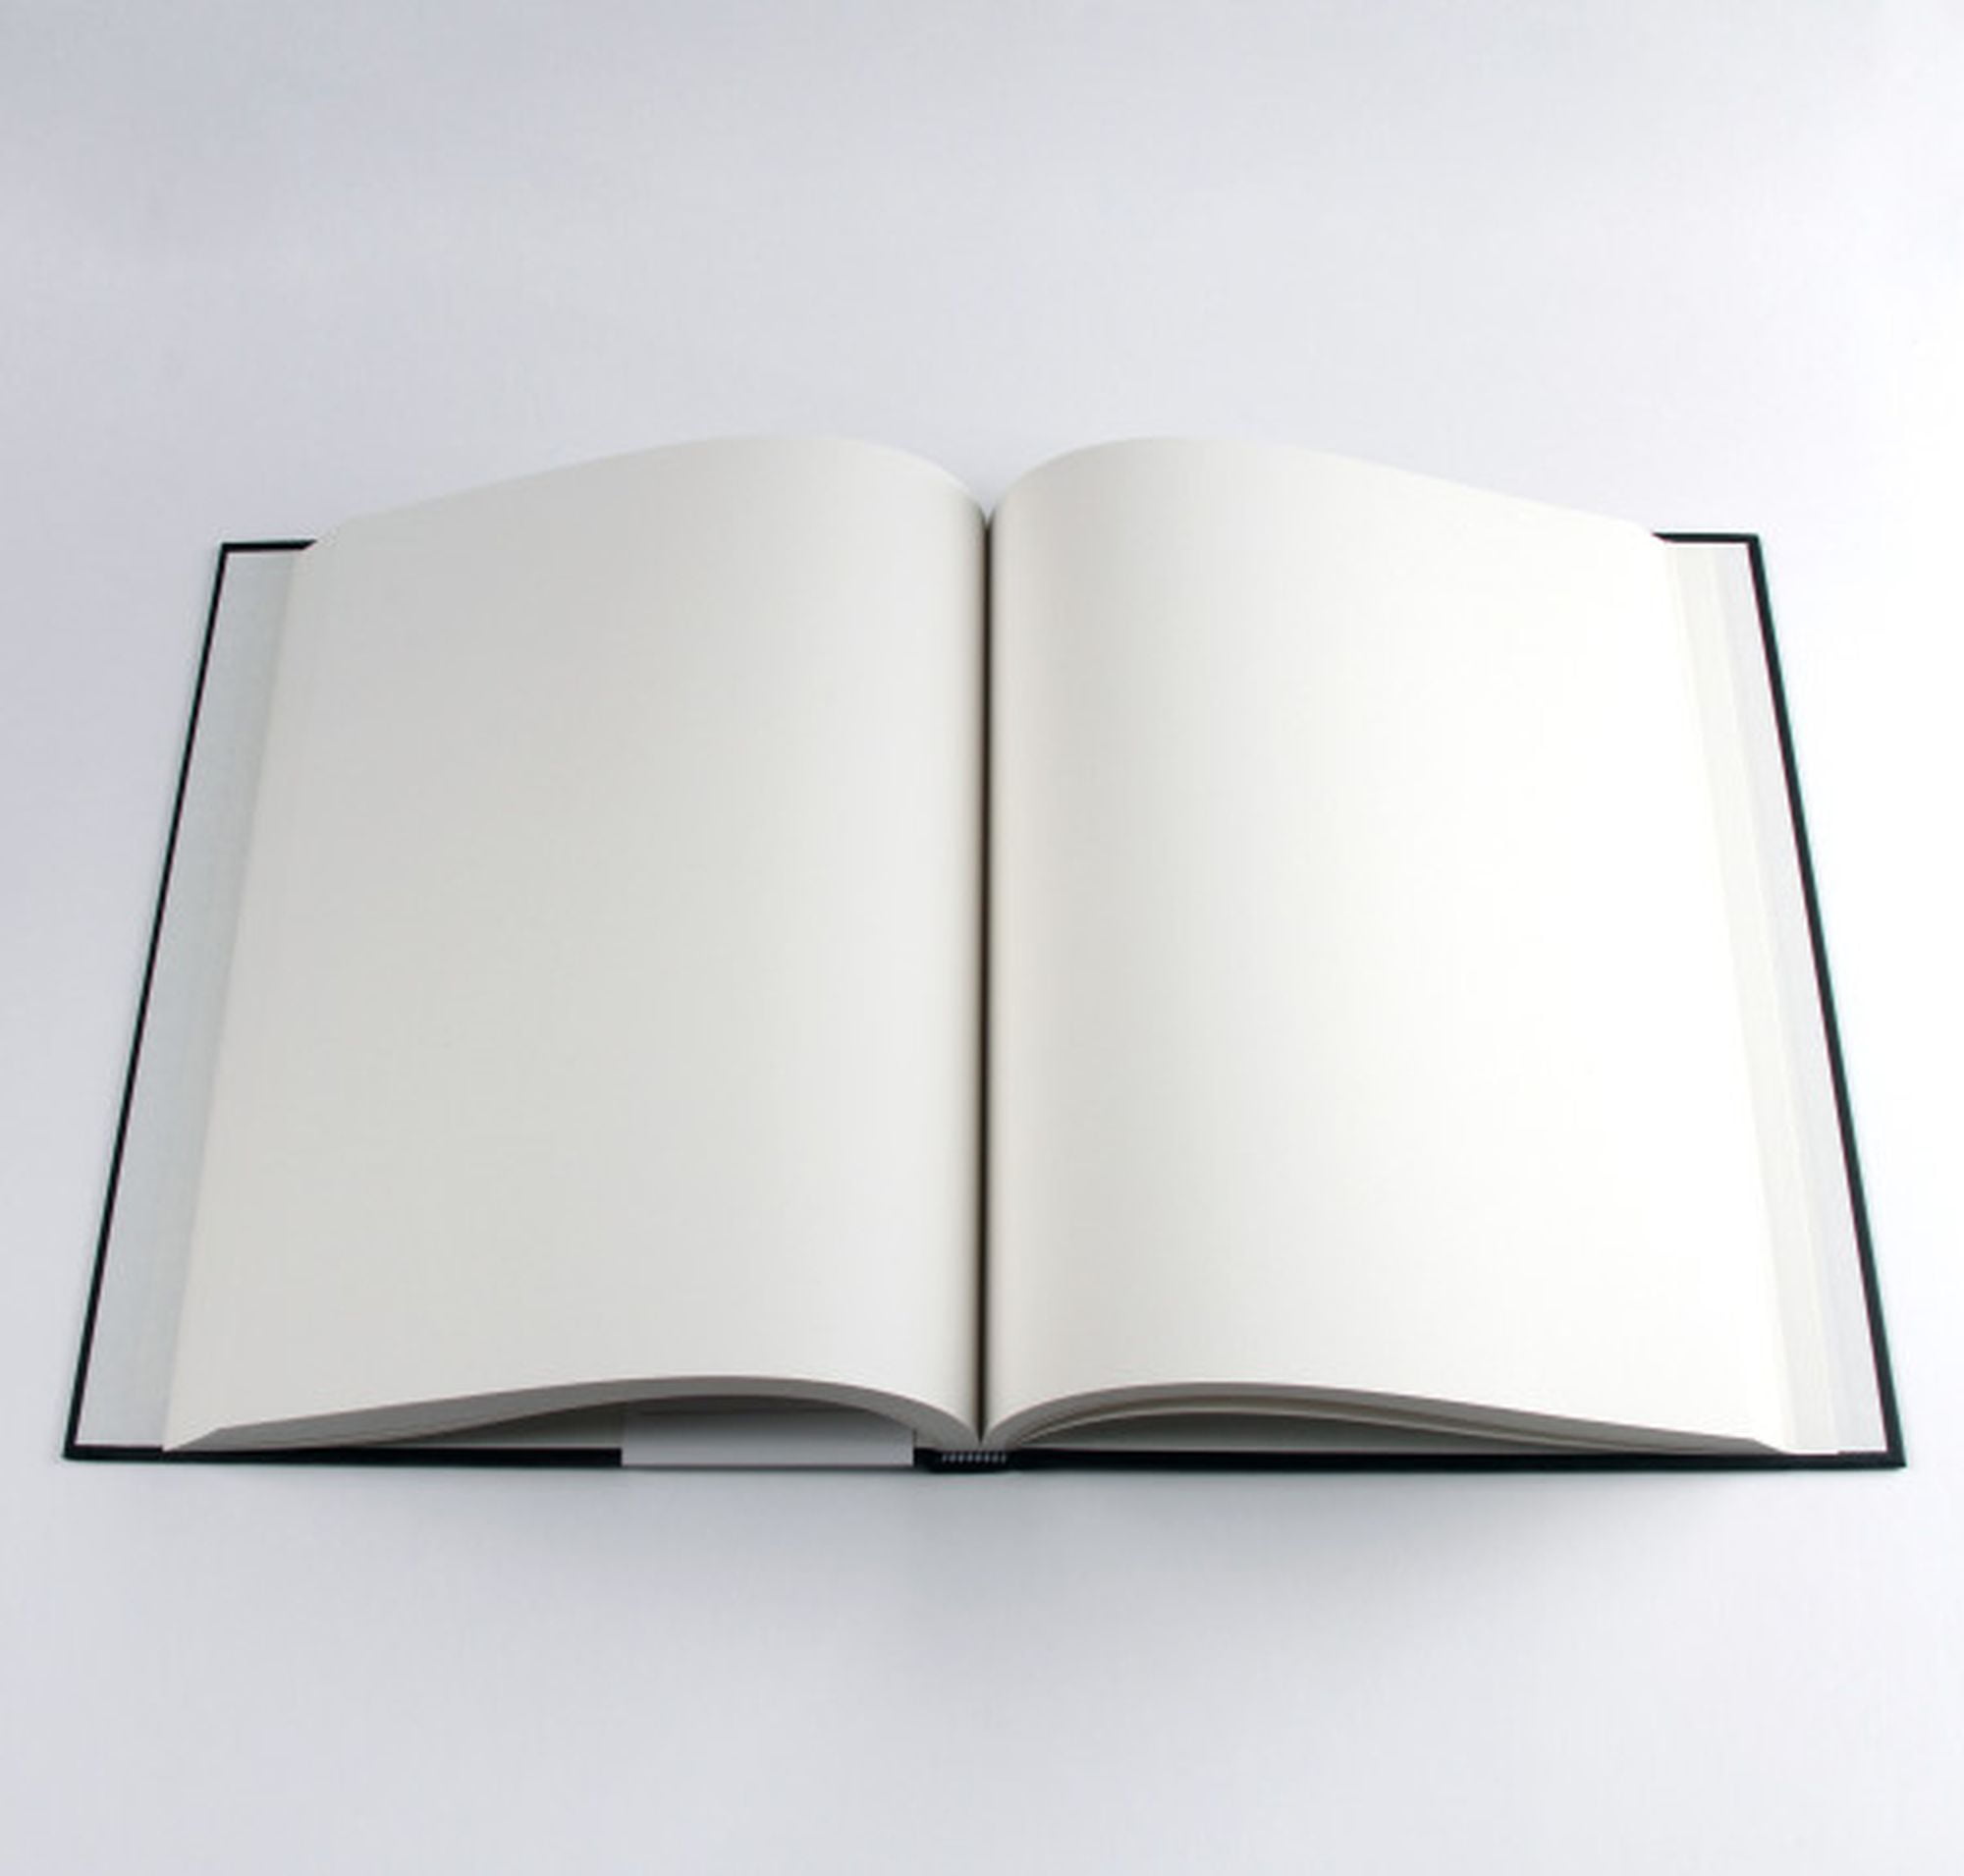 Daler Rowney Simply Hardbound Sketchbook